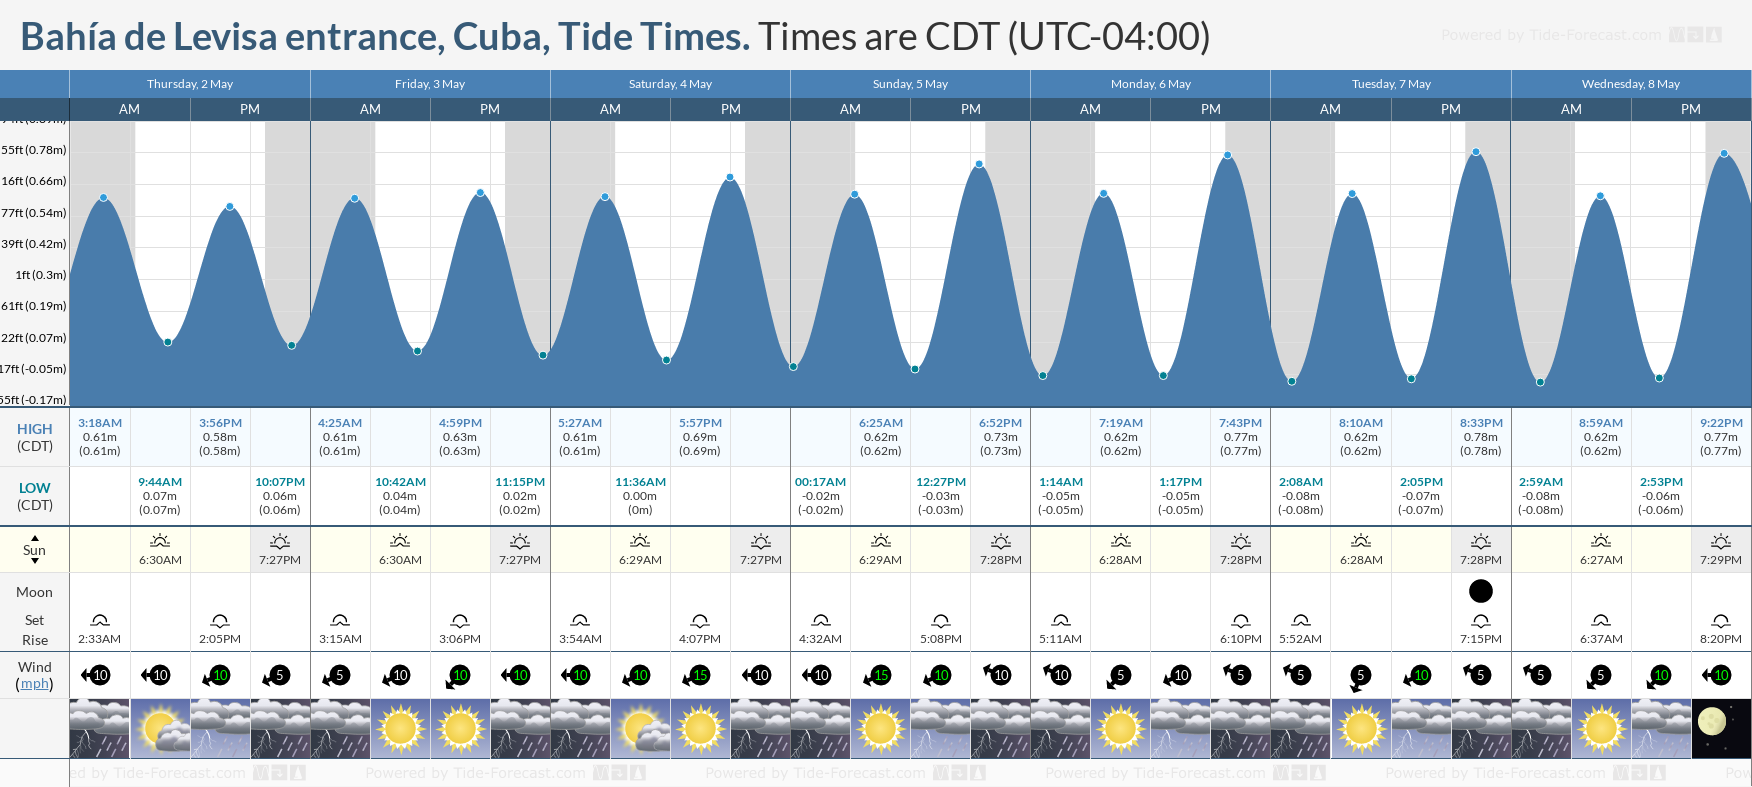 Bahía de Levisa entrance, Cuba Tide Chart including high and low tide tide times for the next 7 days